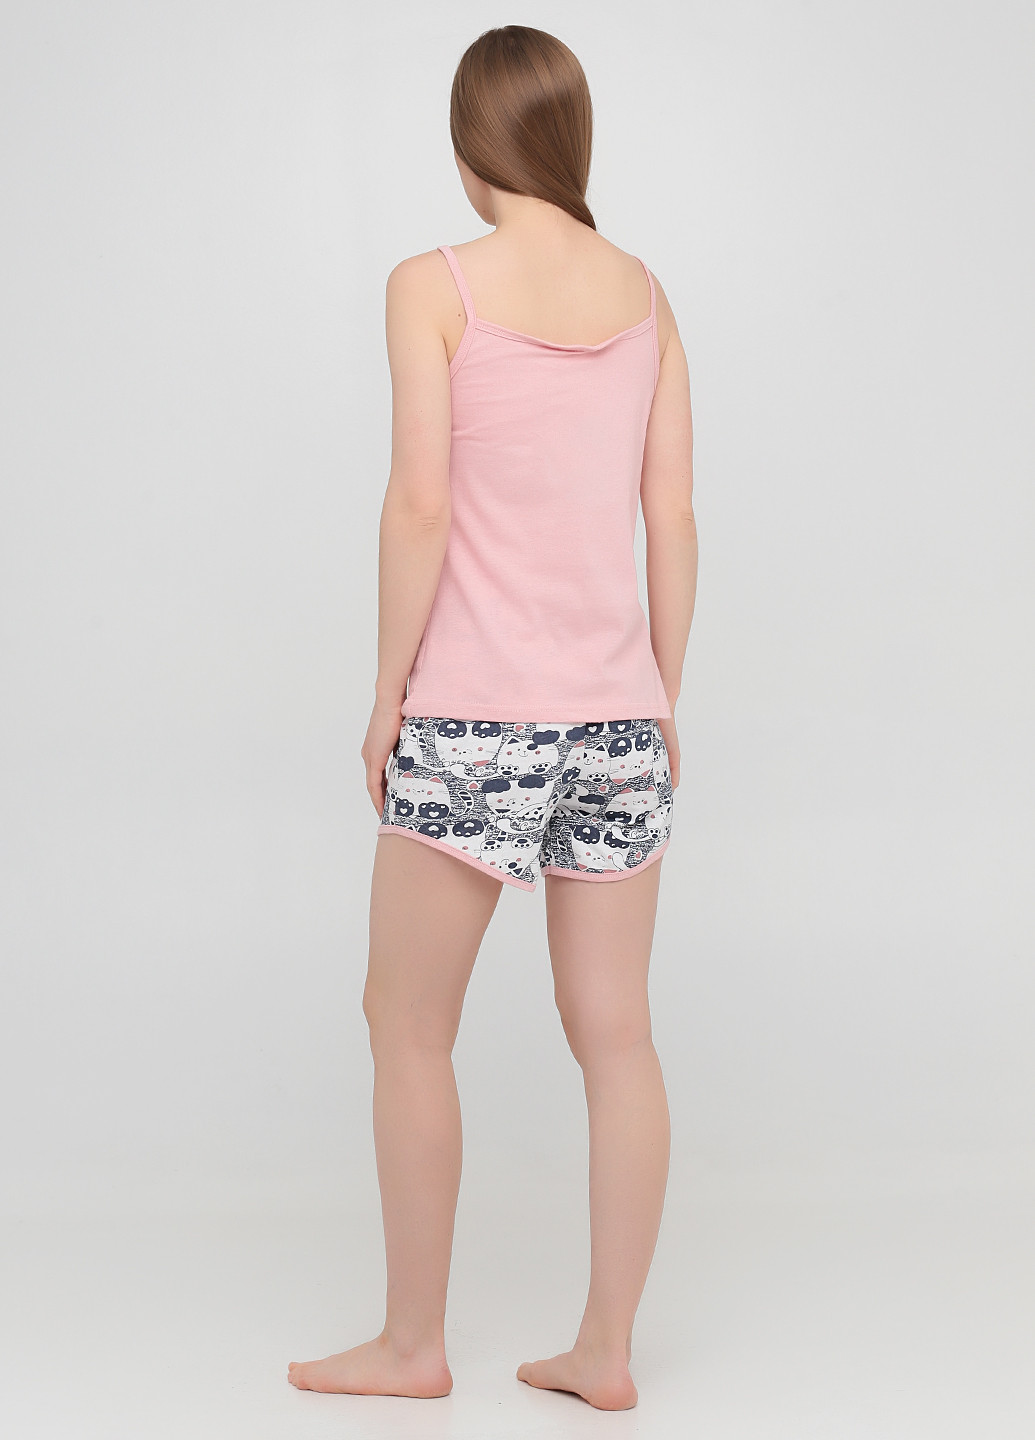 Розовая всесезон пижама (майка, шорты) майка + шорты Marilynmod